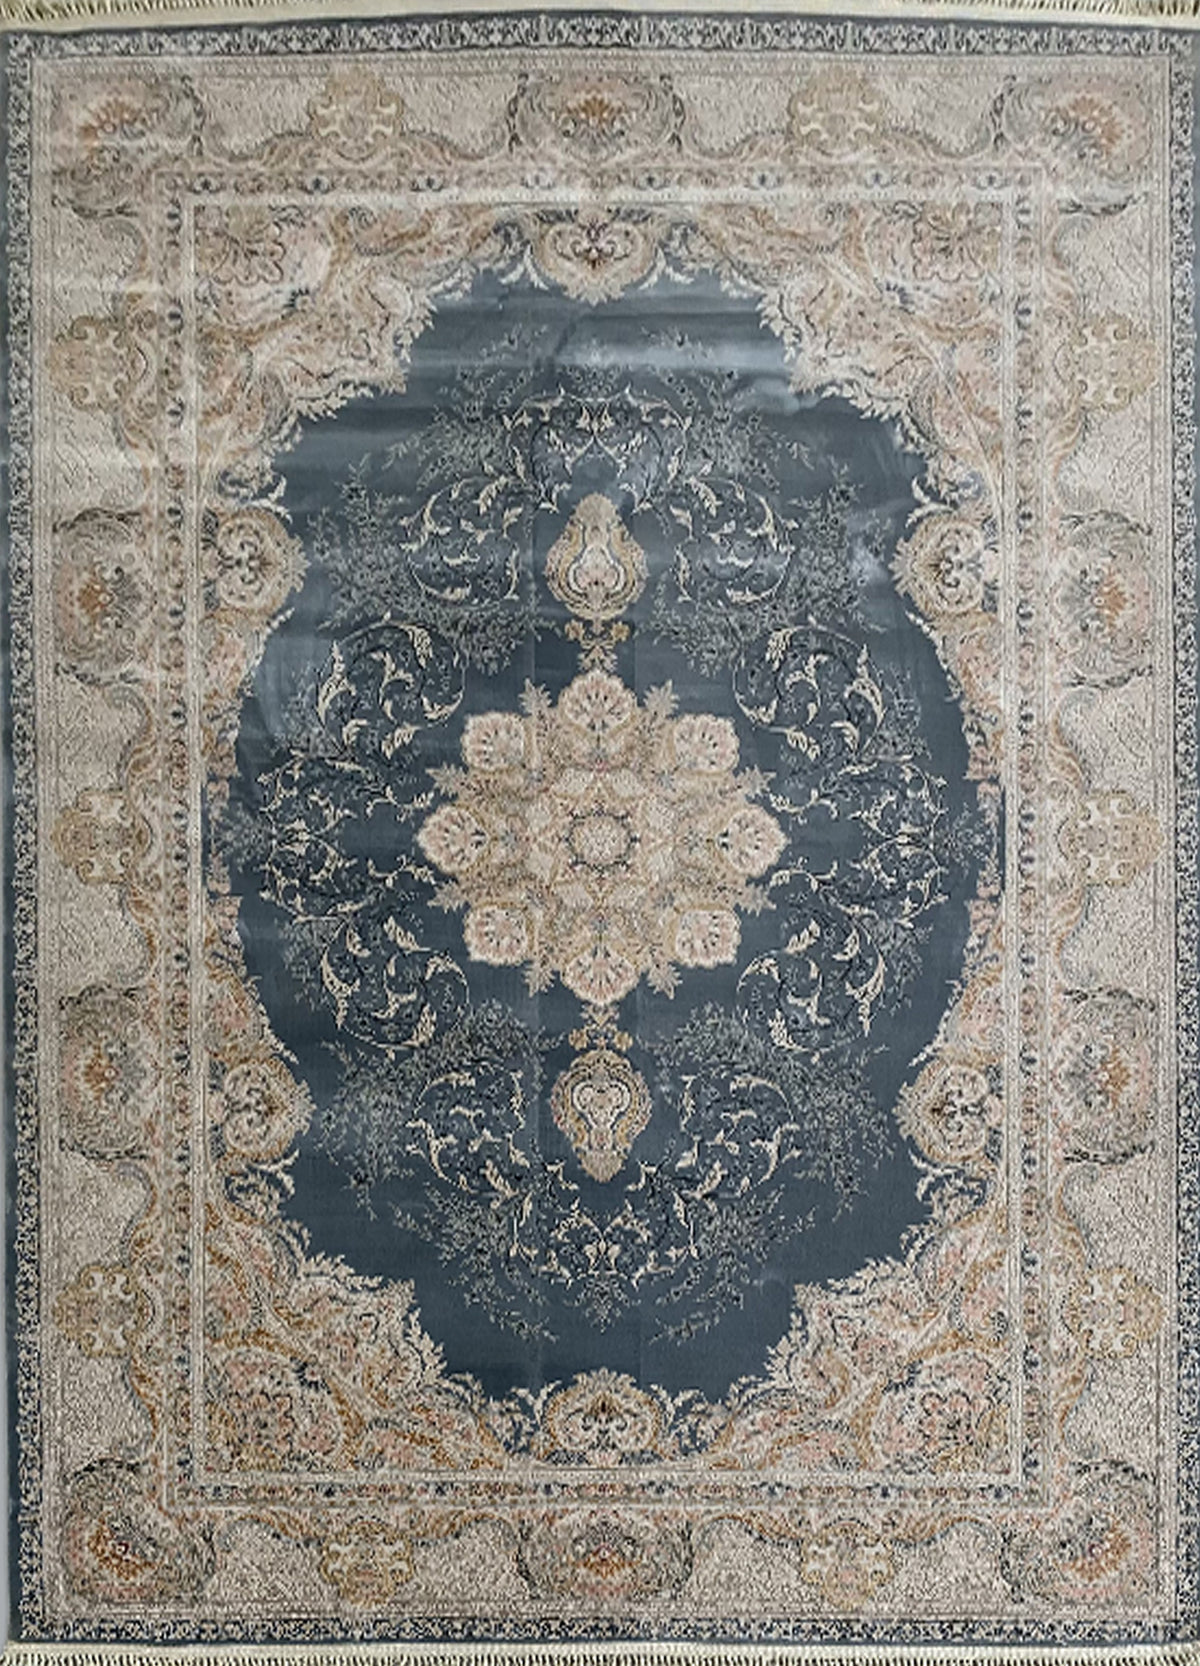 Rugslane Irani Grey Color Traditional Design High Quality Super Premium Silk Carpet 6.6ft X 9.9ft